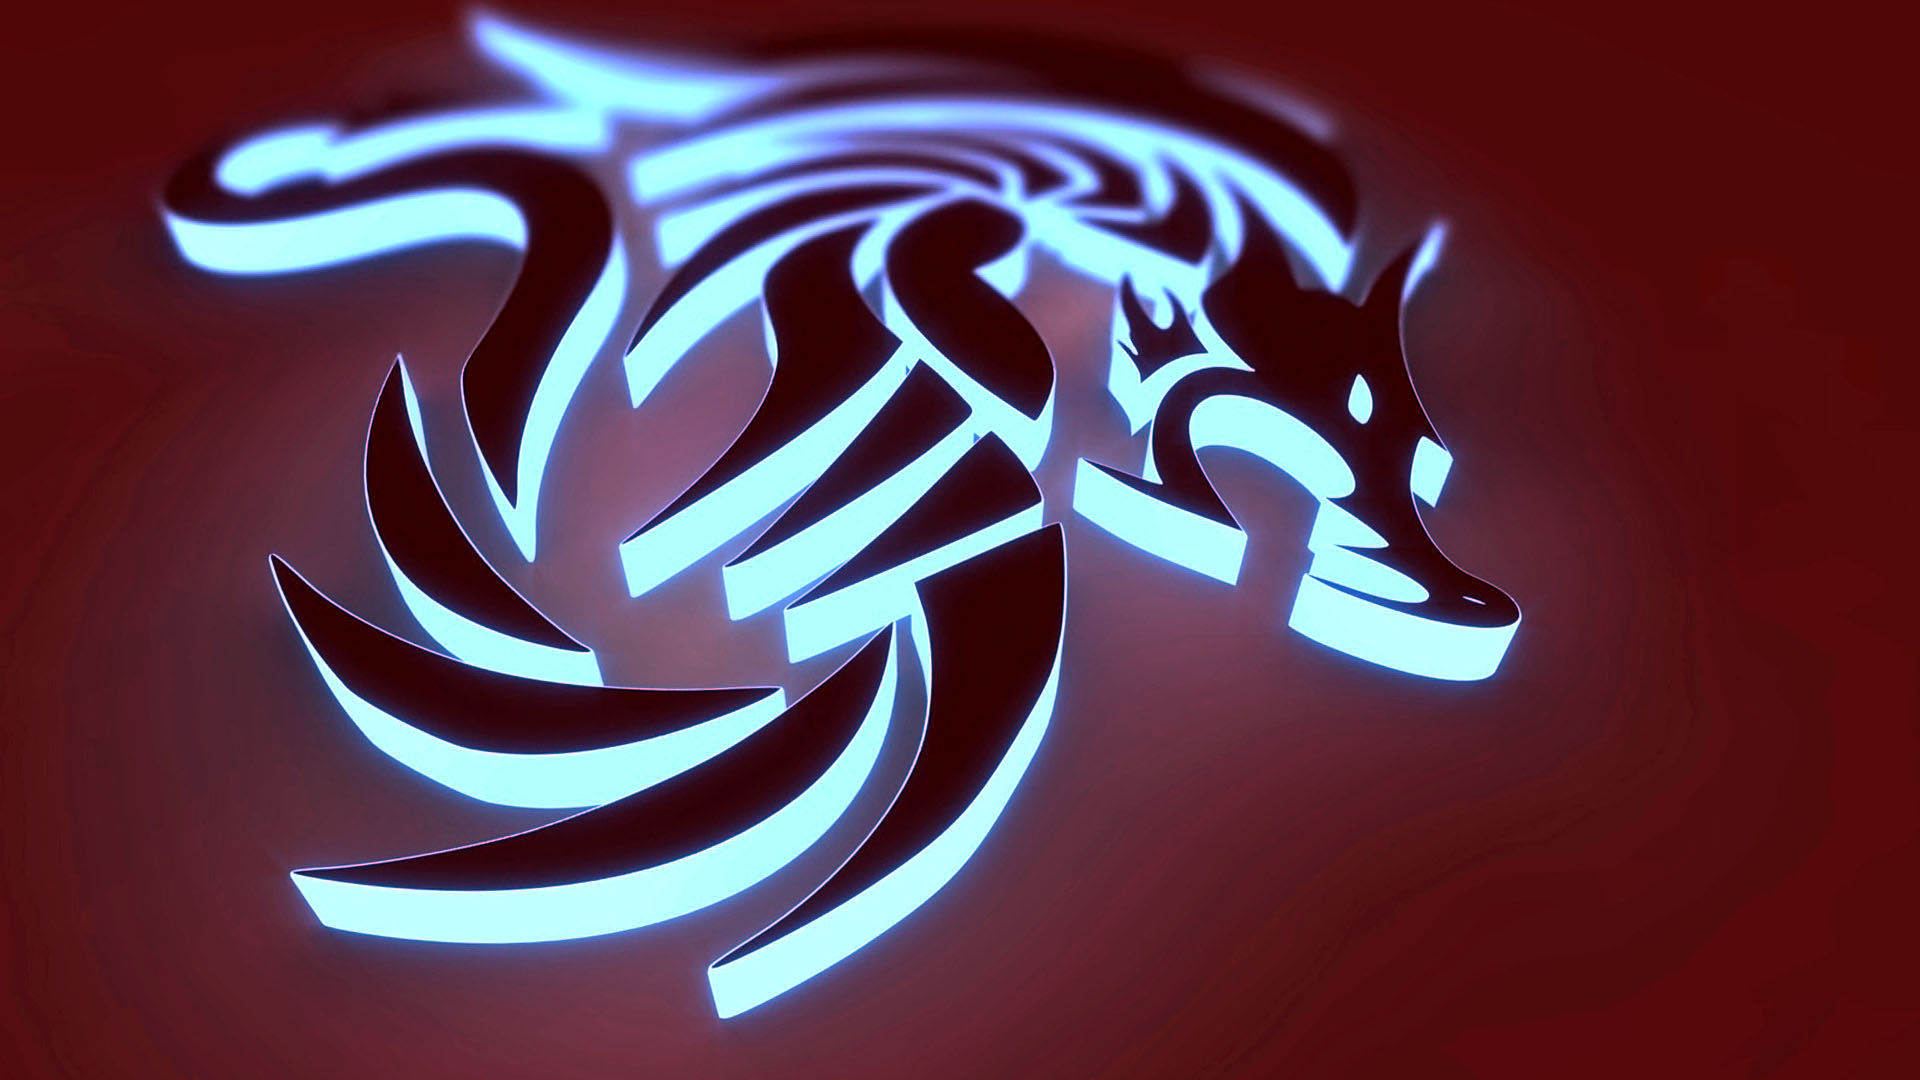 3D Dragon Logo Android Wallpaper